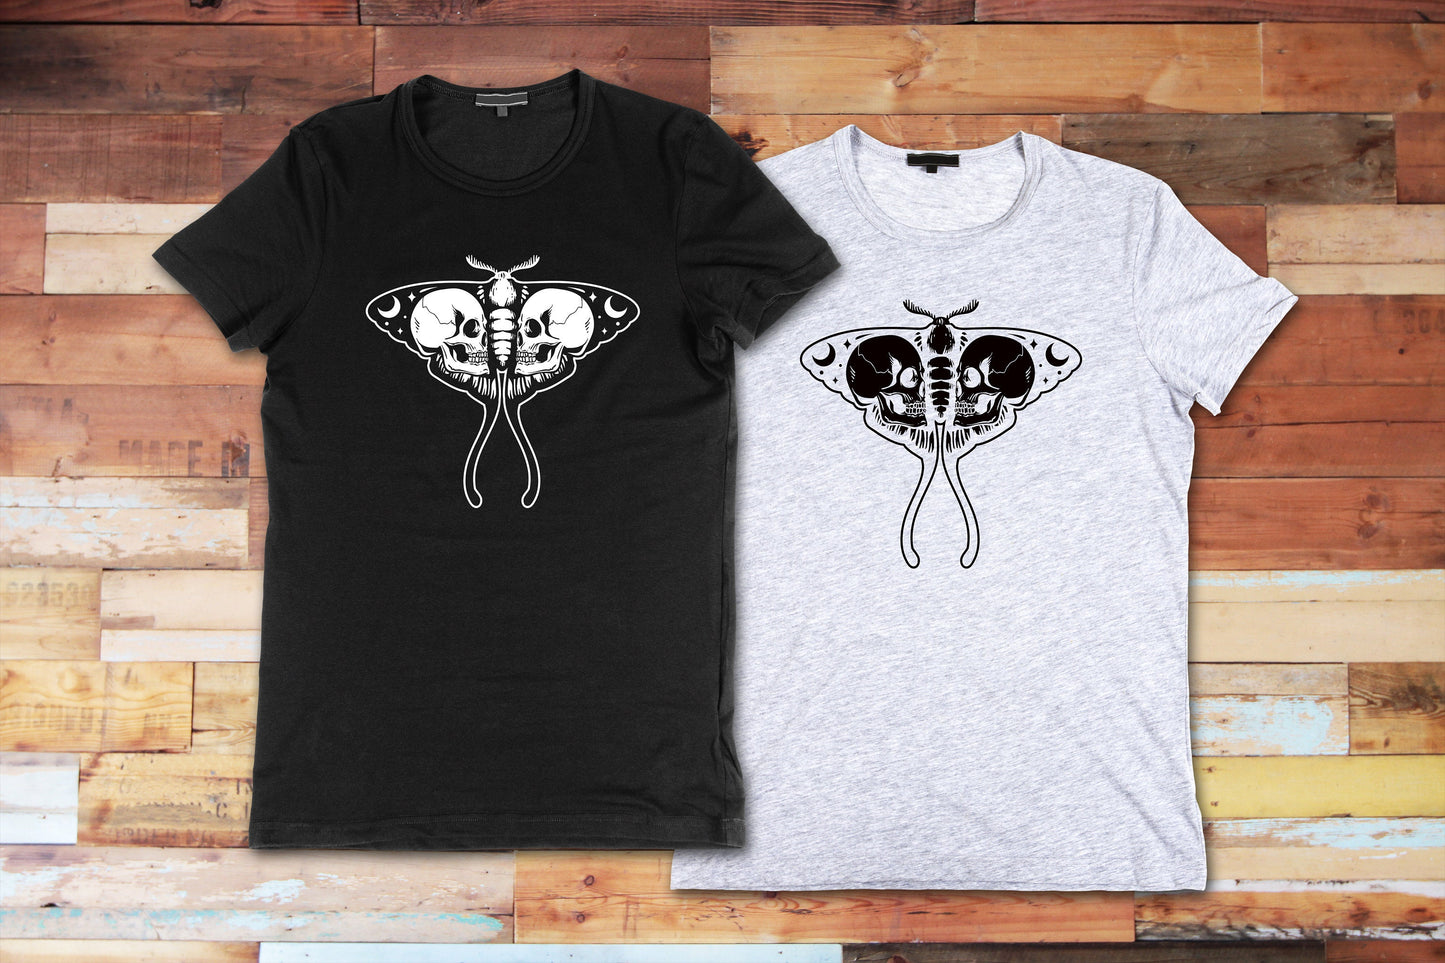 Moth Skull, Tshirt, Celestial Boho, Graphic T's  100% Cotton Black White or Gray